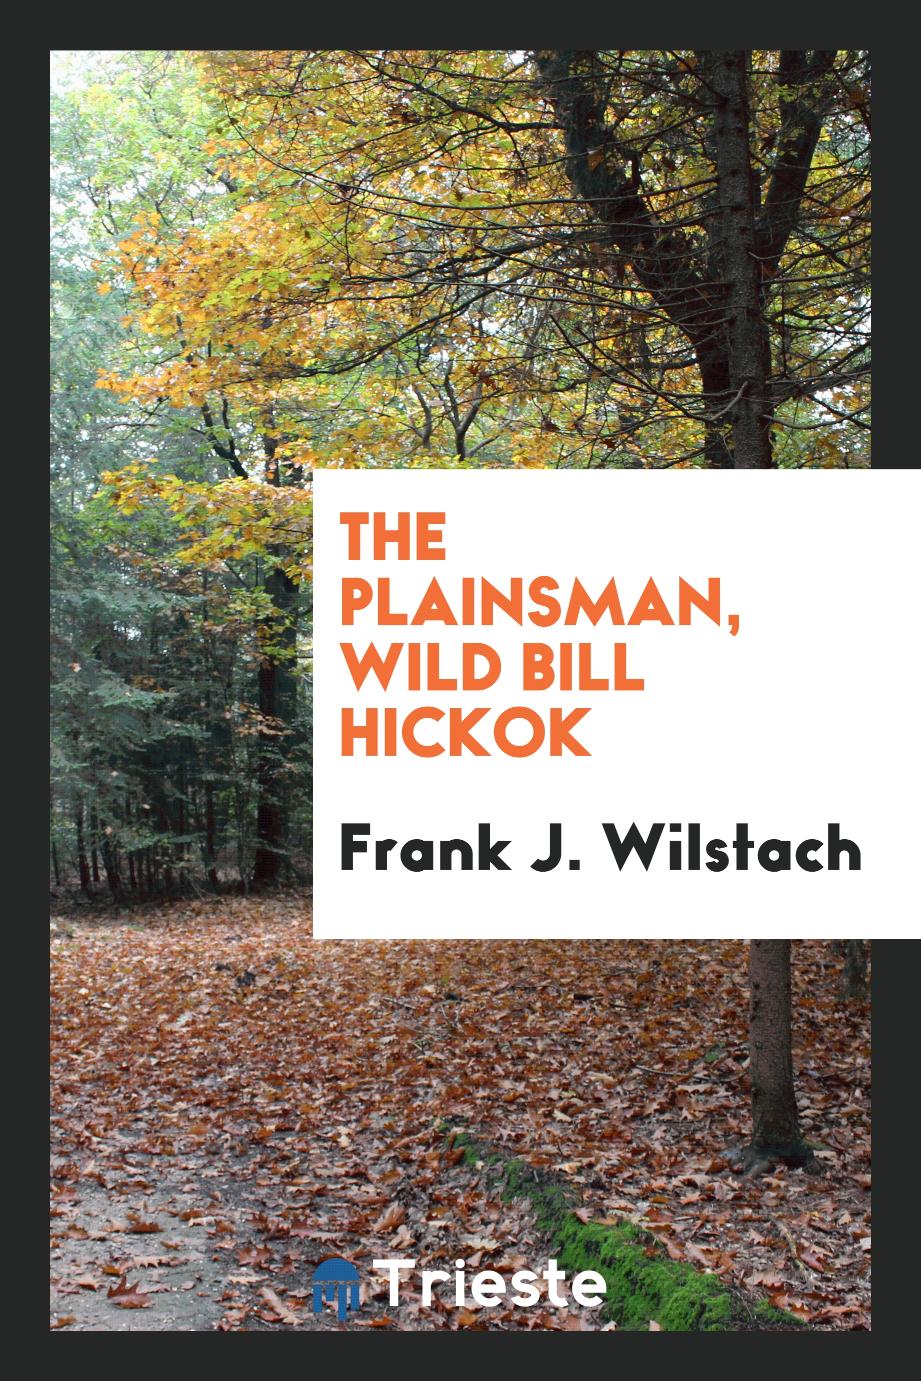 The Plainsman, Wild Bill Hickok